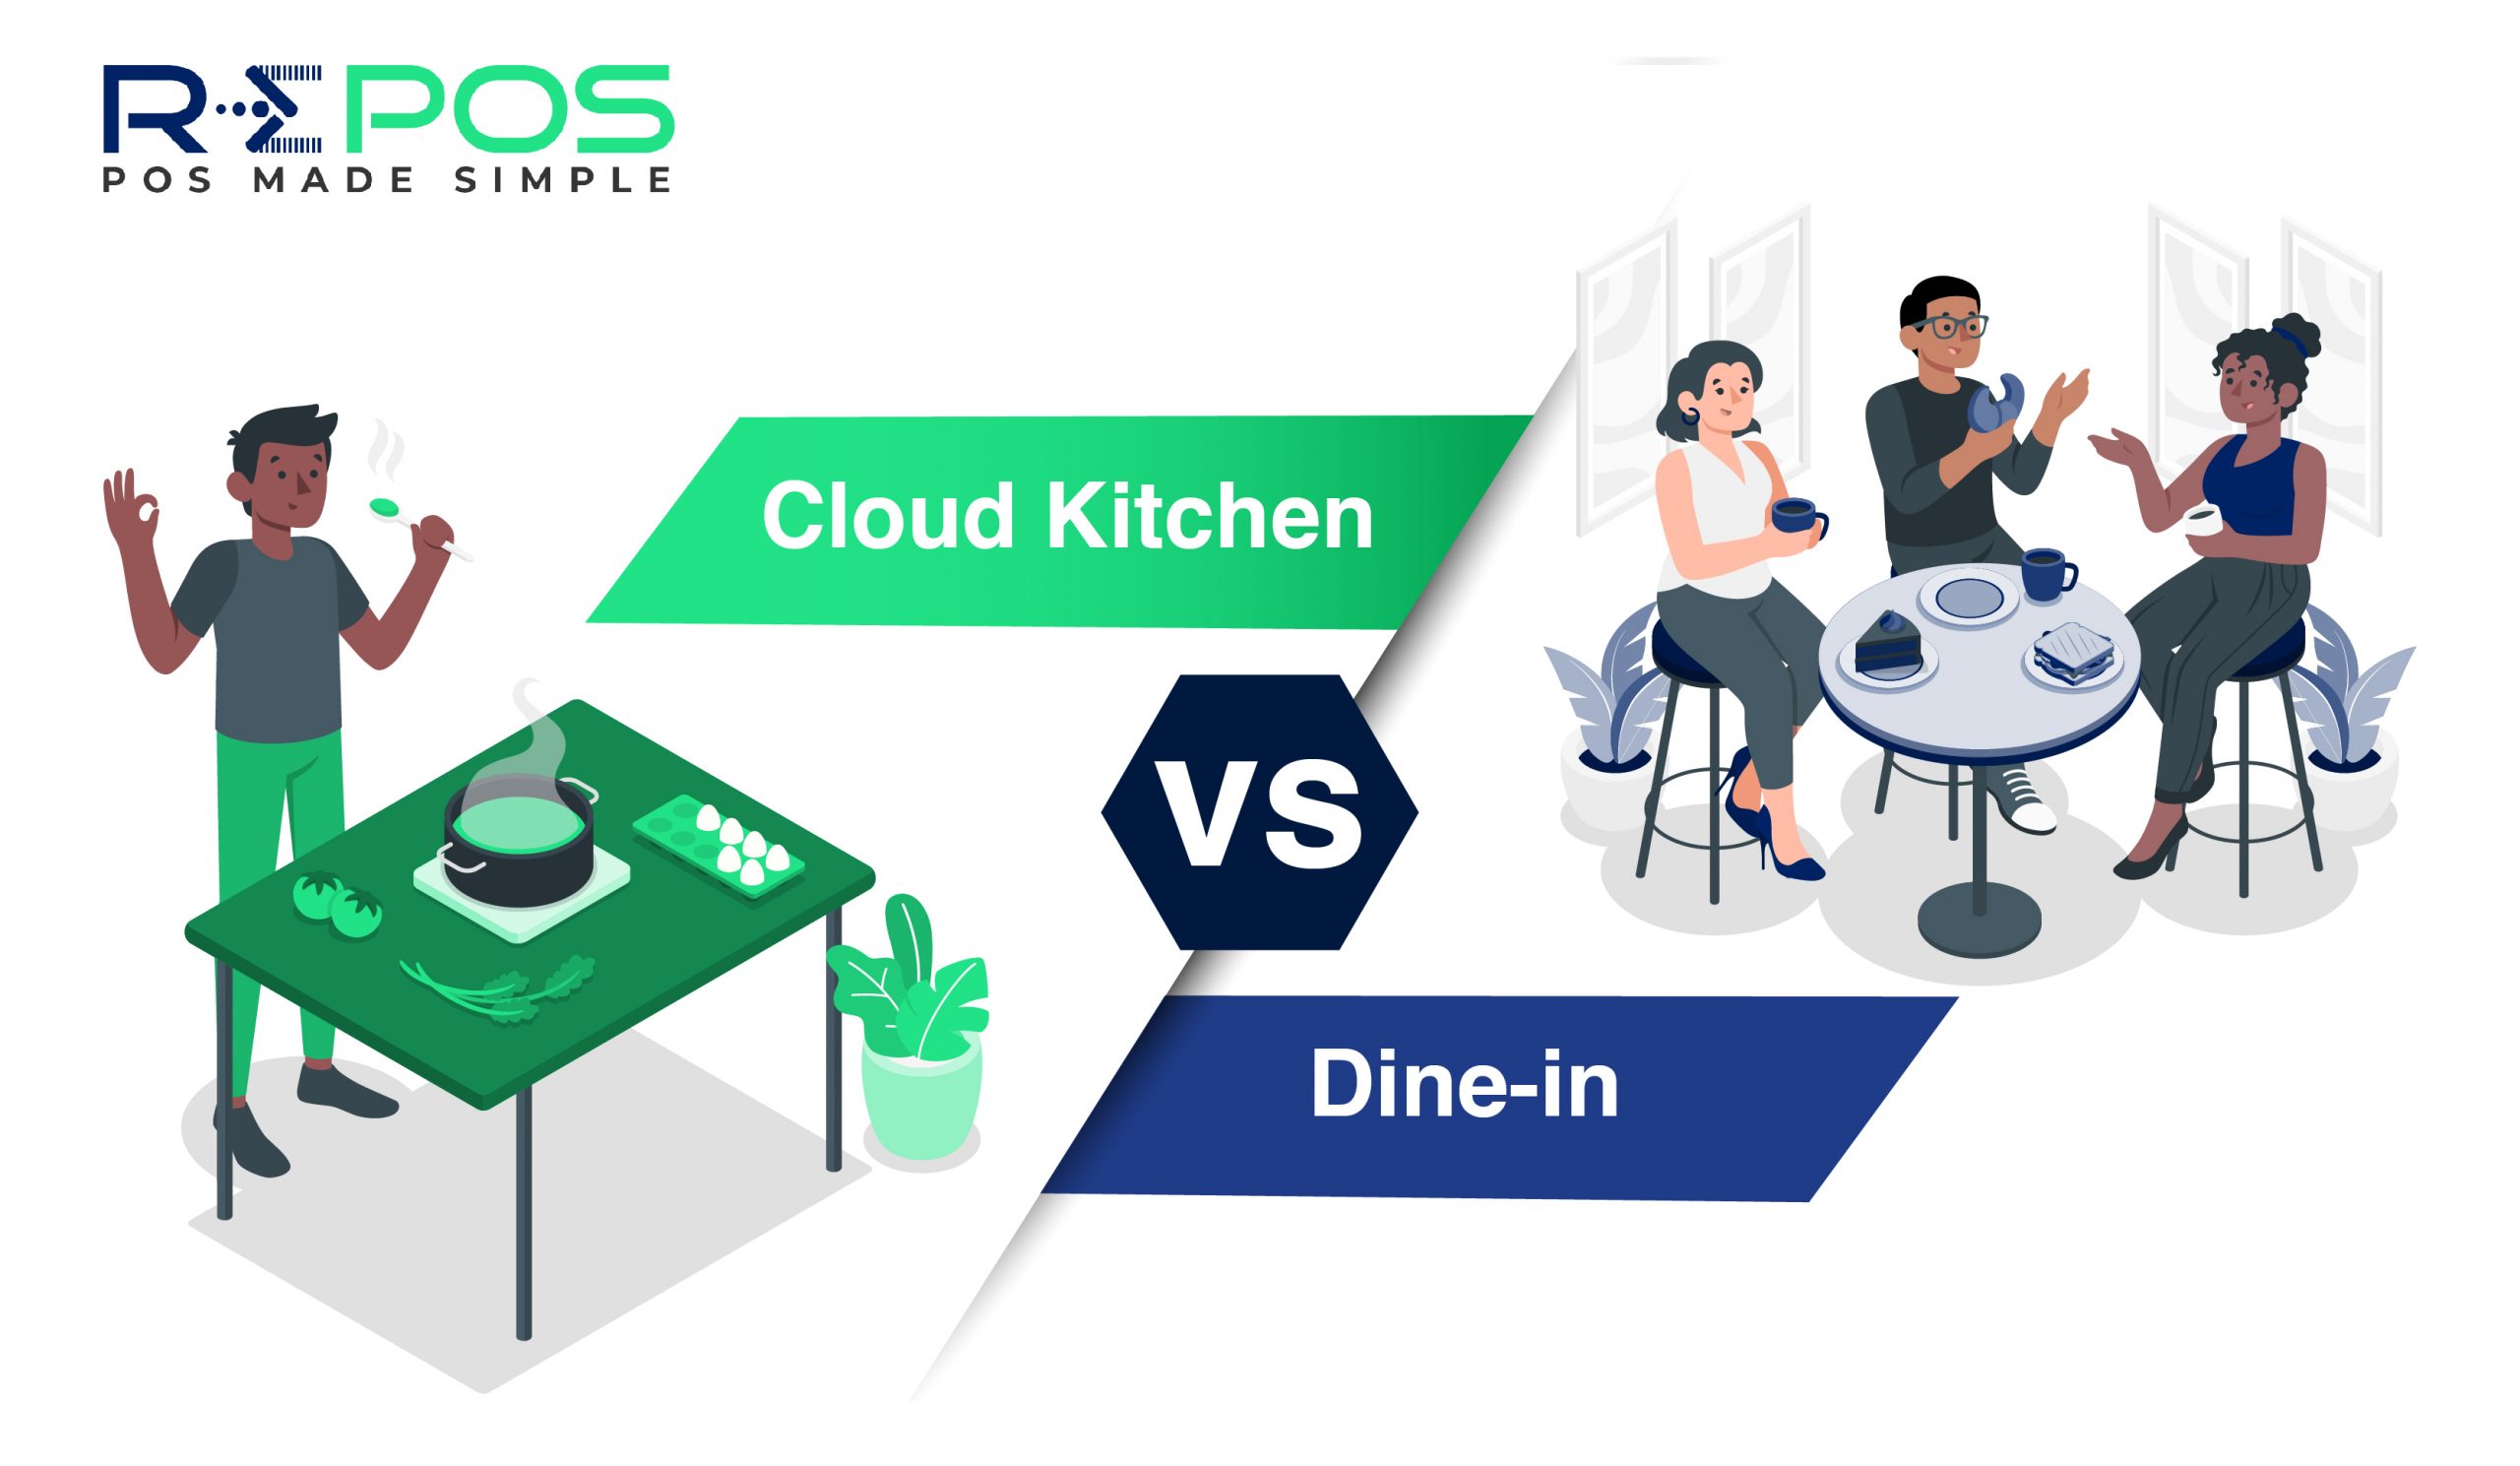 Cloud kitchen vs Dine-in